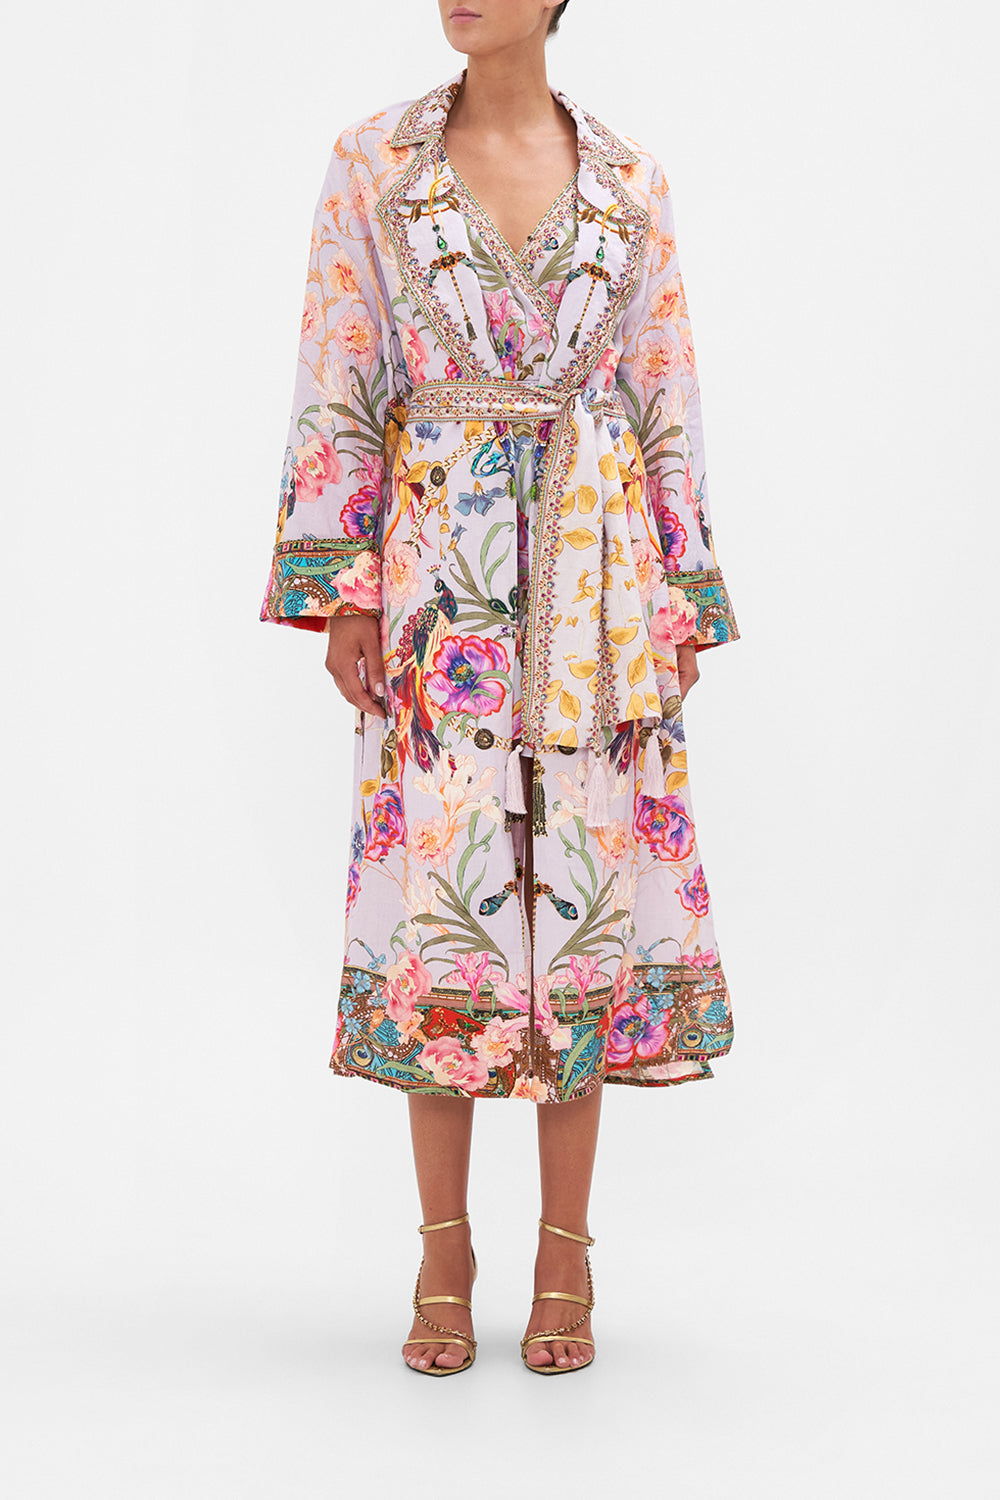 Kaleidoscope Blush Lace Dress & Jacket